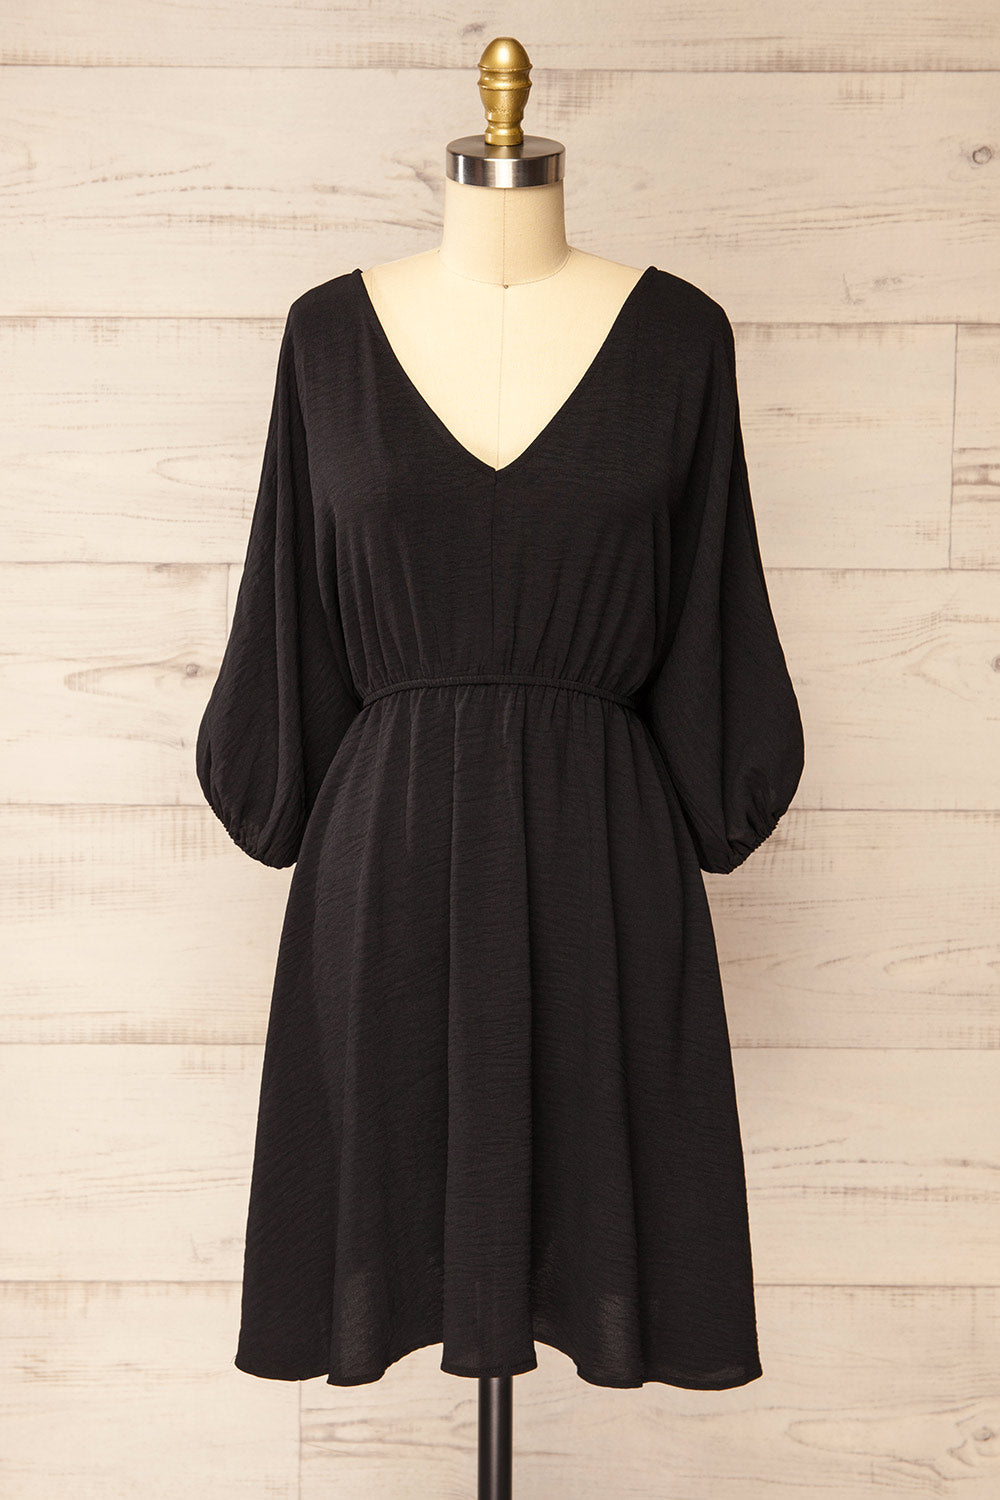 Fordwich Short Black Dress w/ Batwing Sleeves | La petite garçonne front view